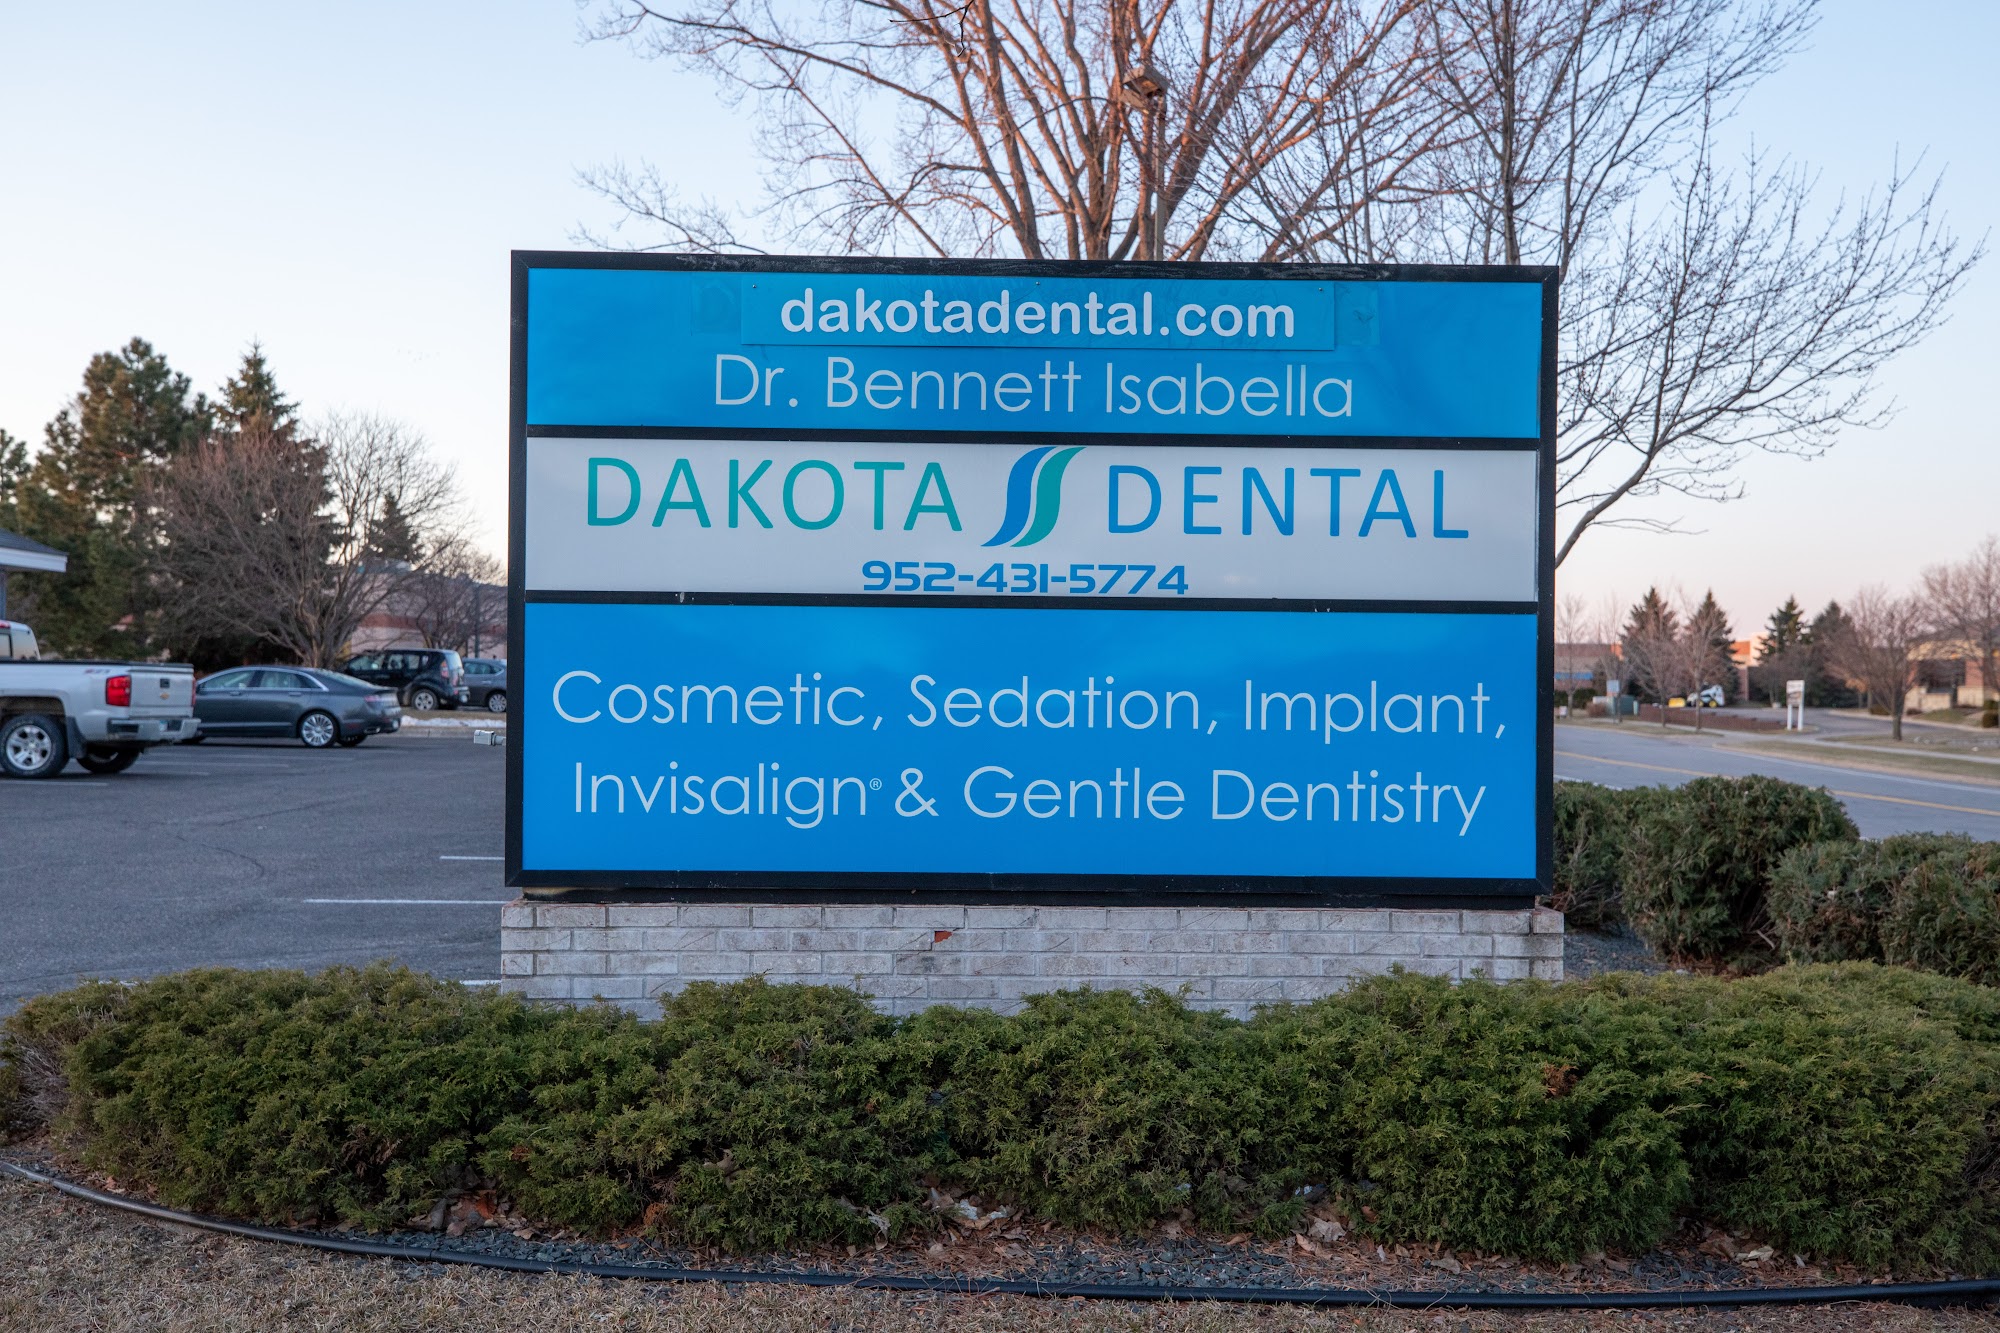 Dakota Dental and Wellness Center